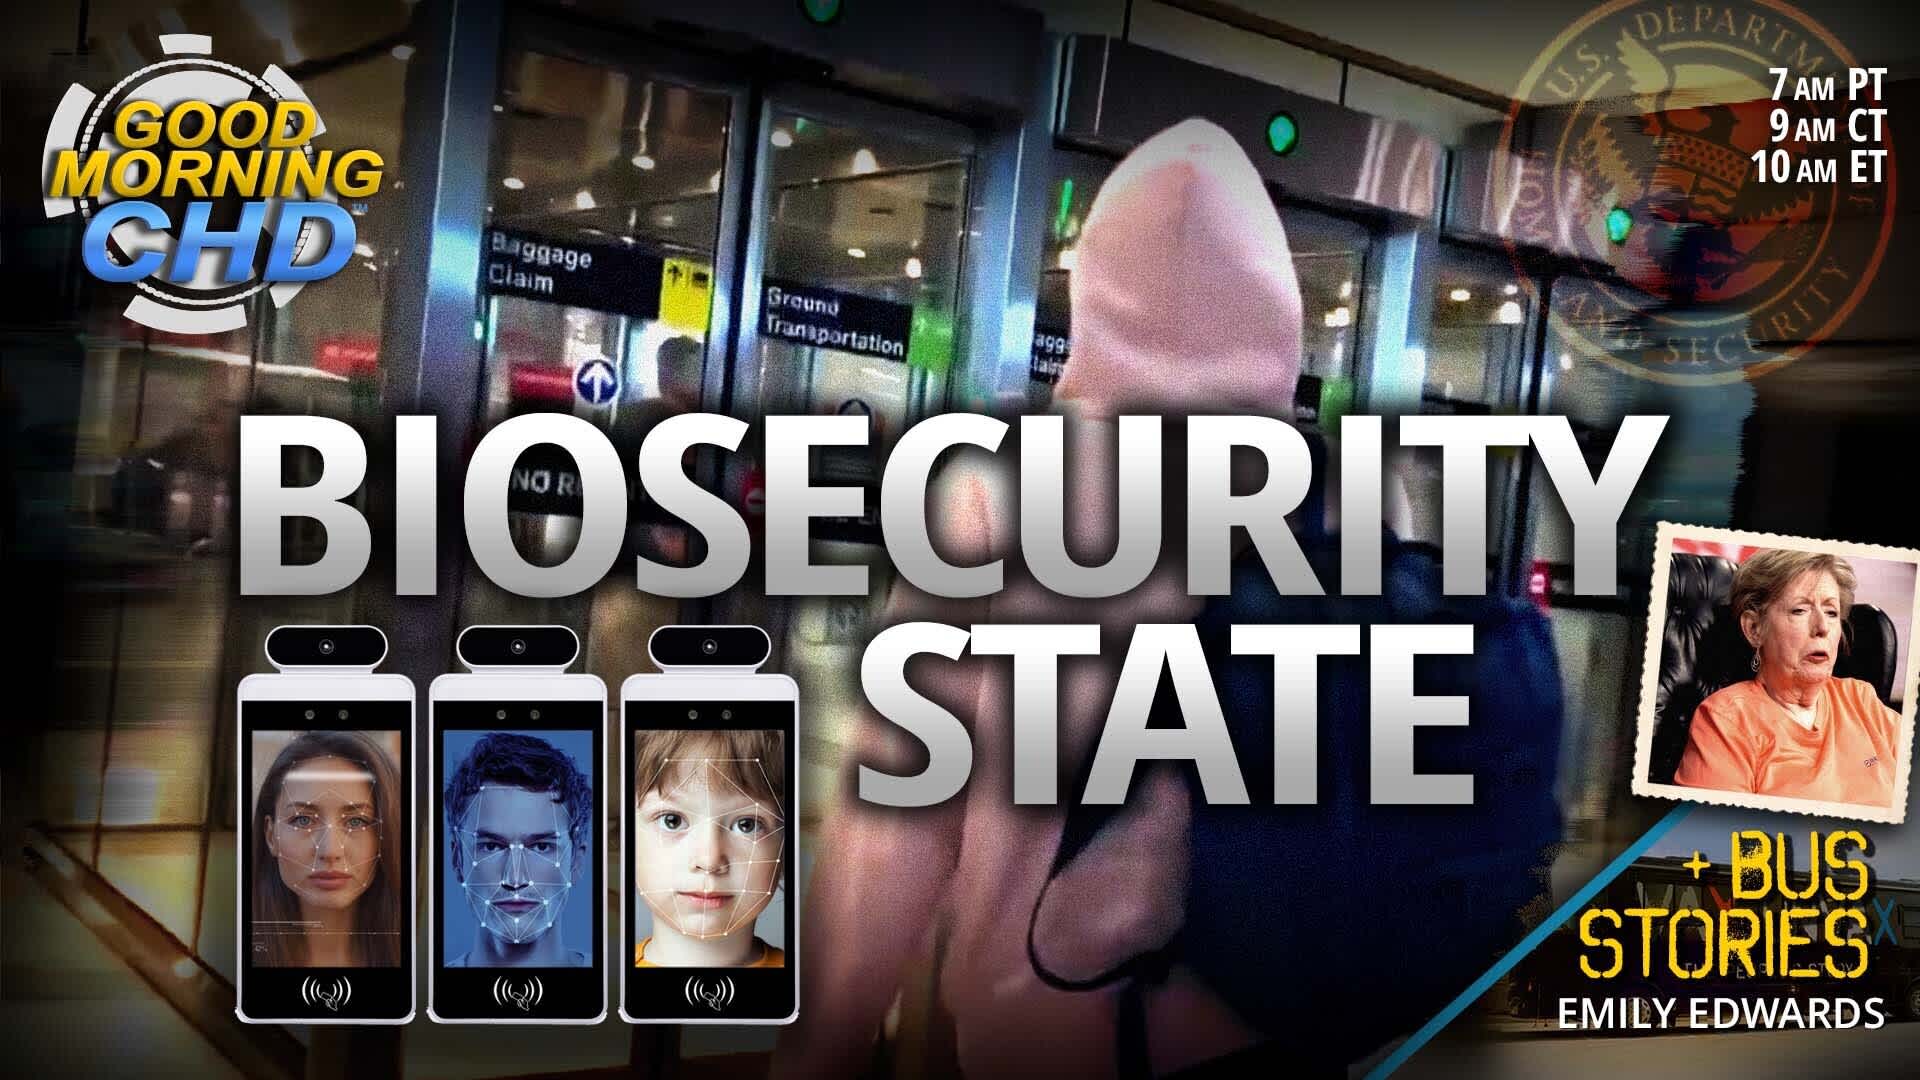 TSA + The Biosecurity State